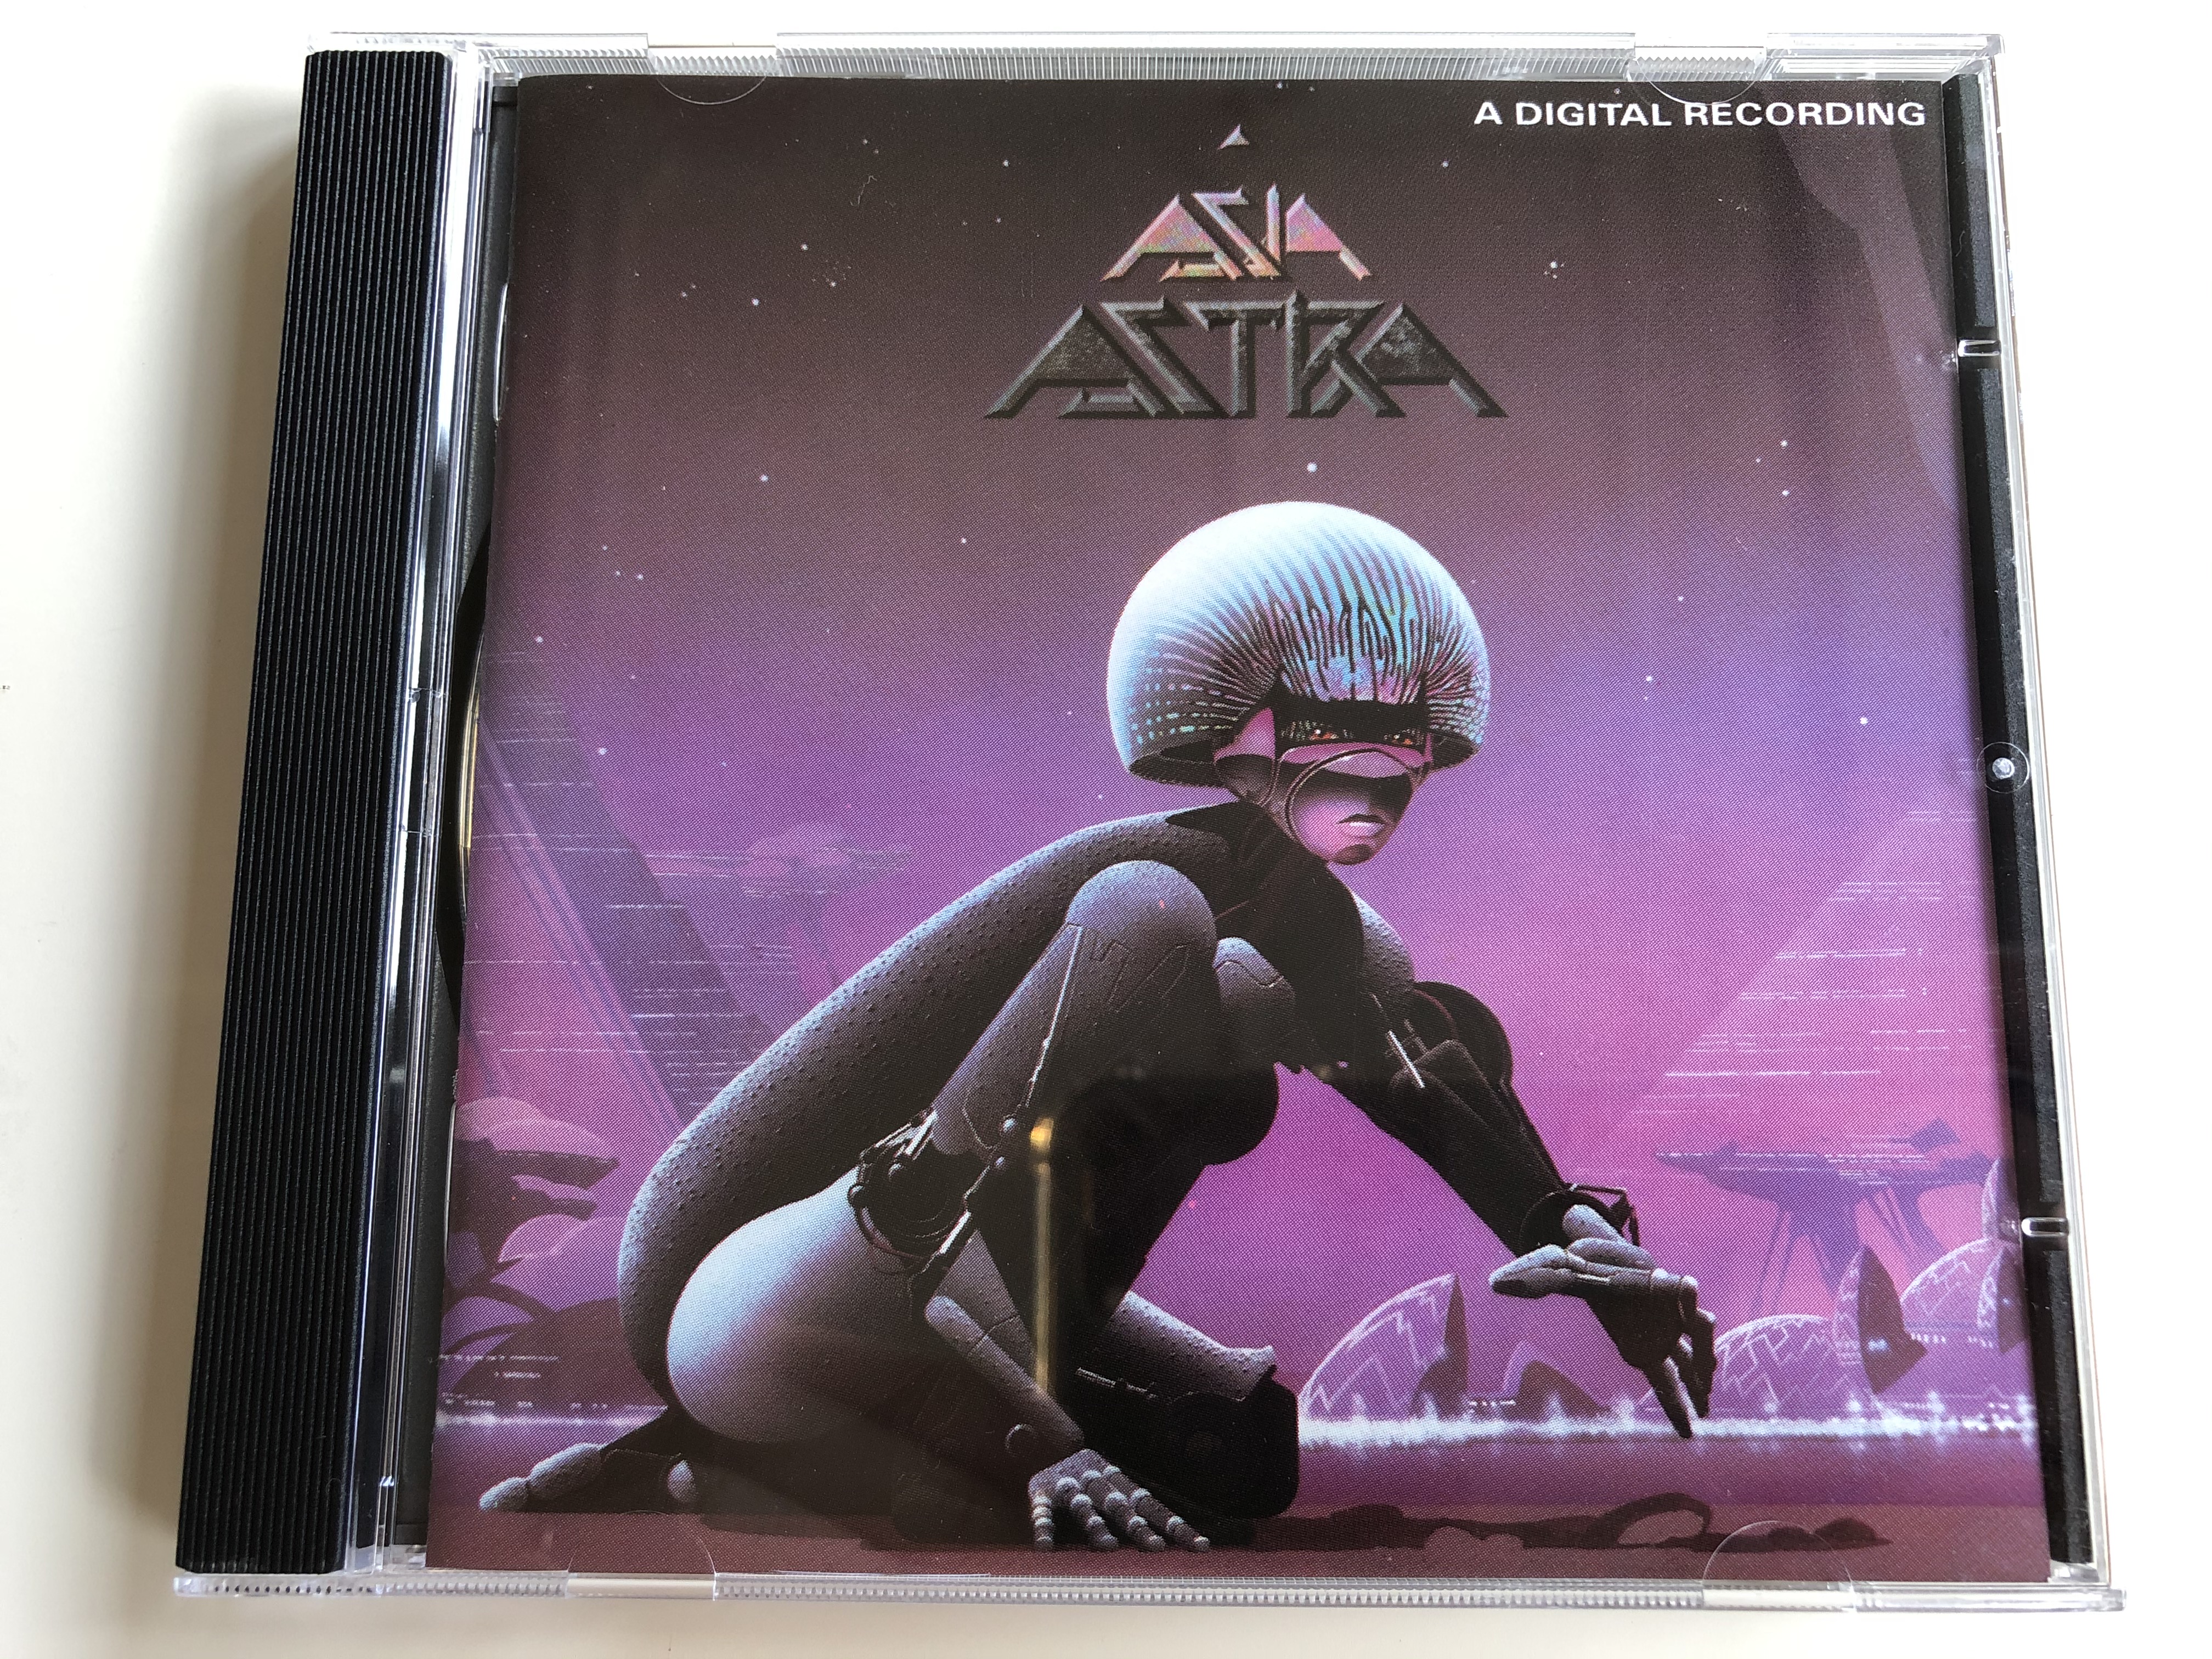 asia-astra-a-digital-recording-geffen-records-audio-cd-1985-ged-24072-1-.jpg